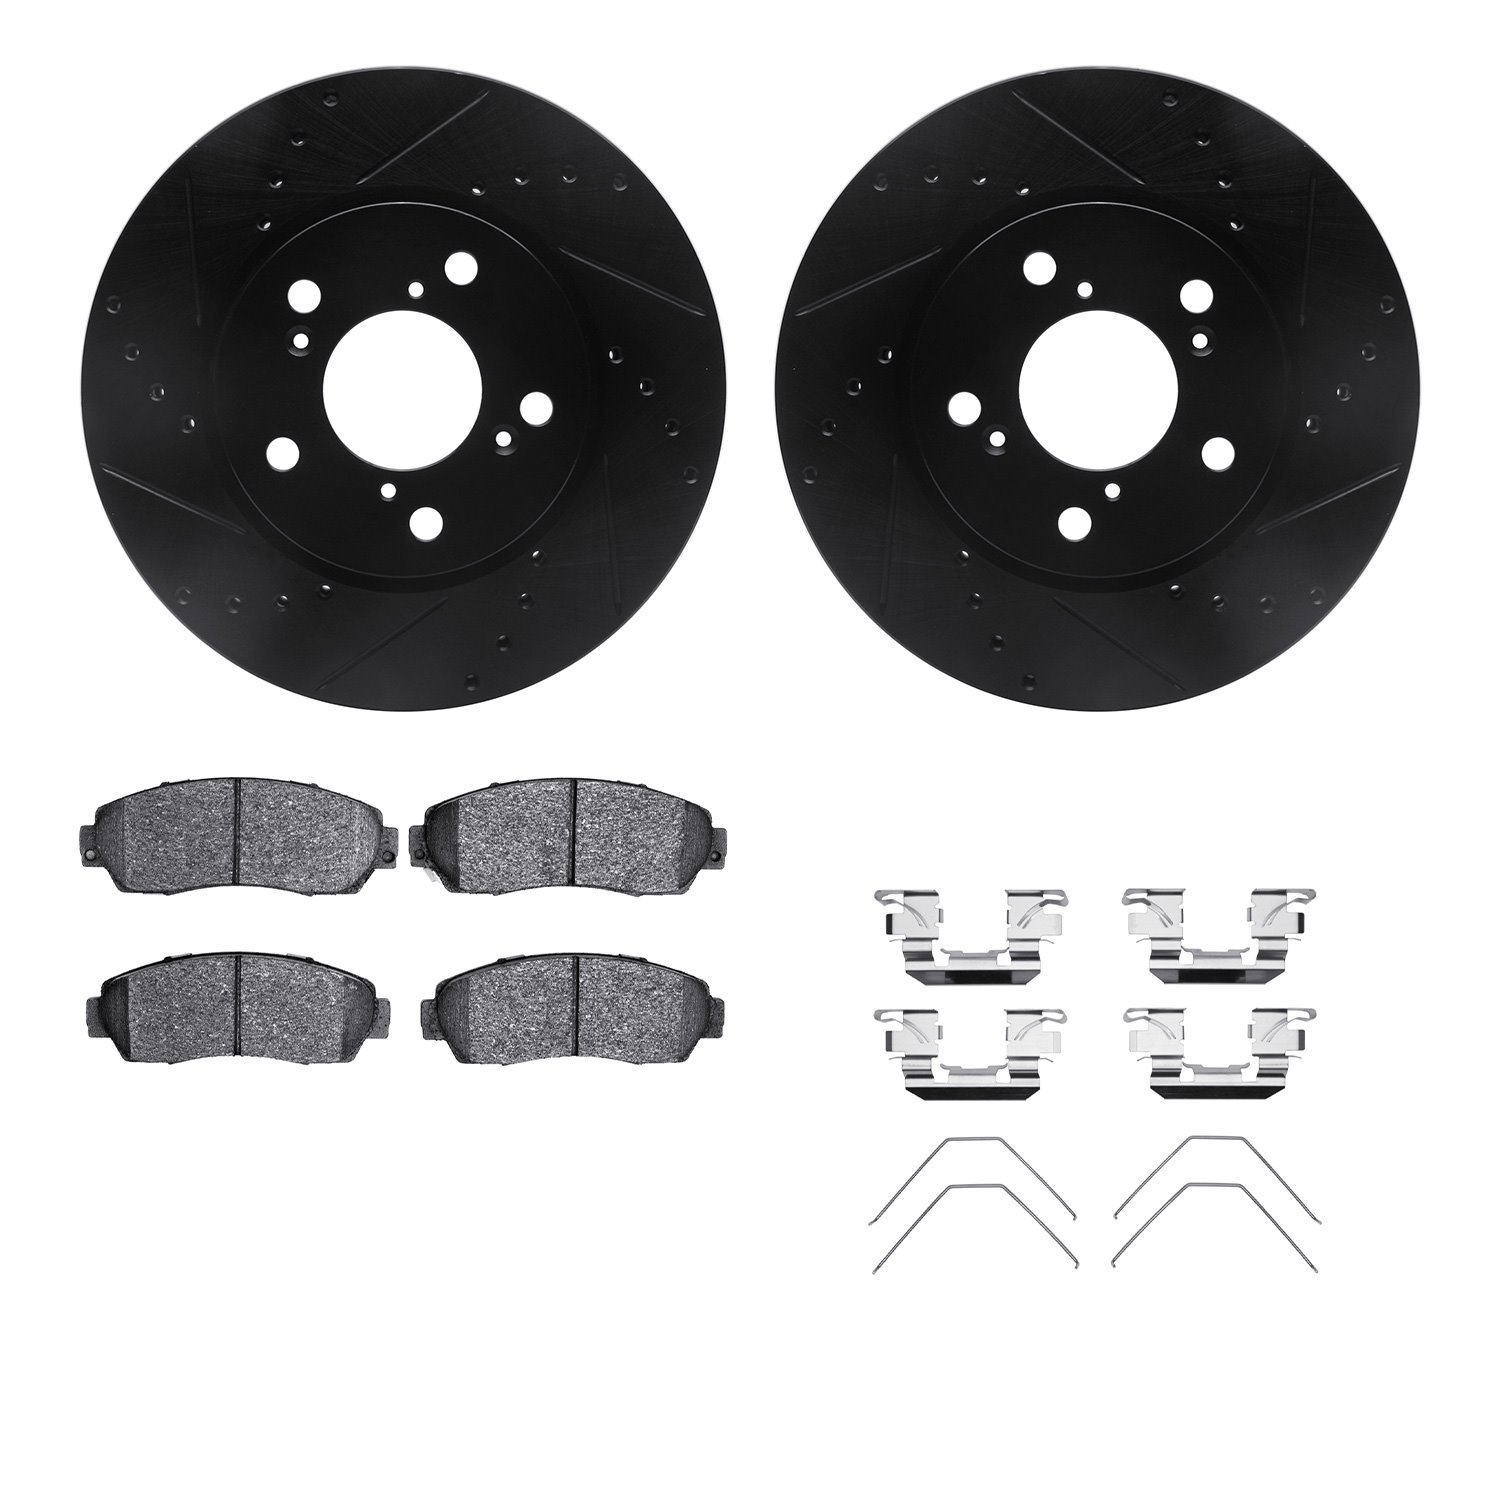 8312-59084 Drilled/Slotted Brake Rotors with 3000-Series Ceramic Brake Pads Kit & Hardware [Black], 2005-2010 Acura/Honda, Posit